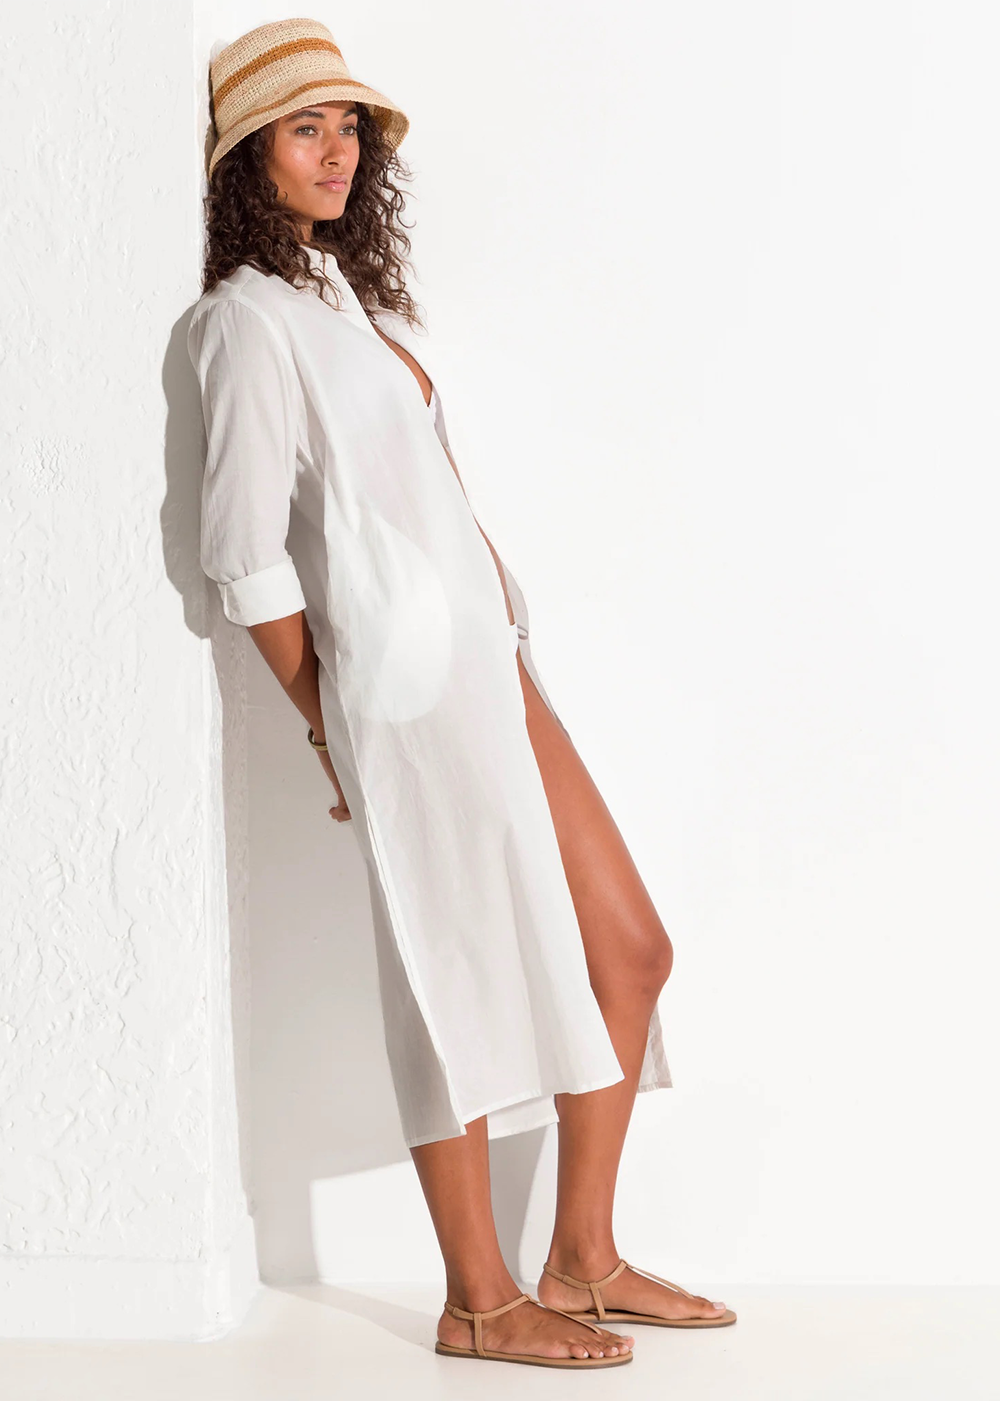 Solana Maxi Shirt Dress - White - Echo new York - Danali - EB0465-100